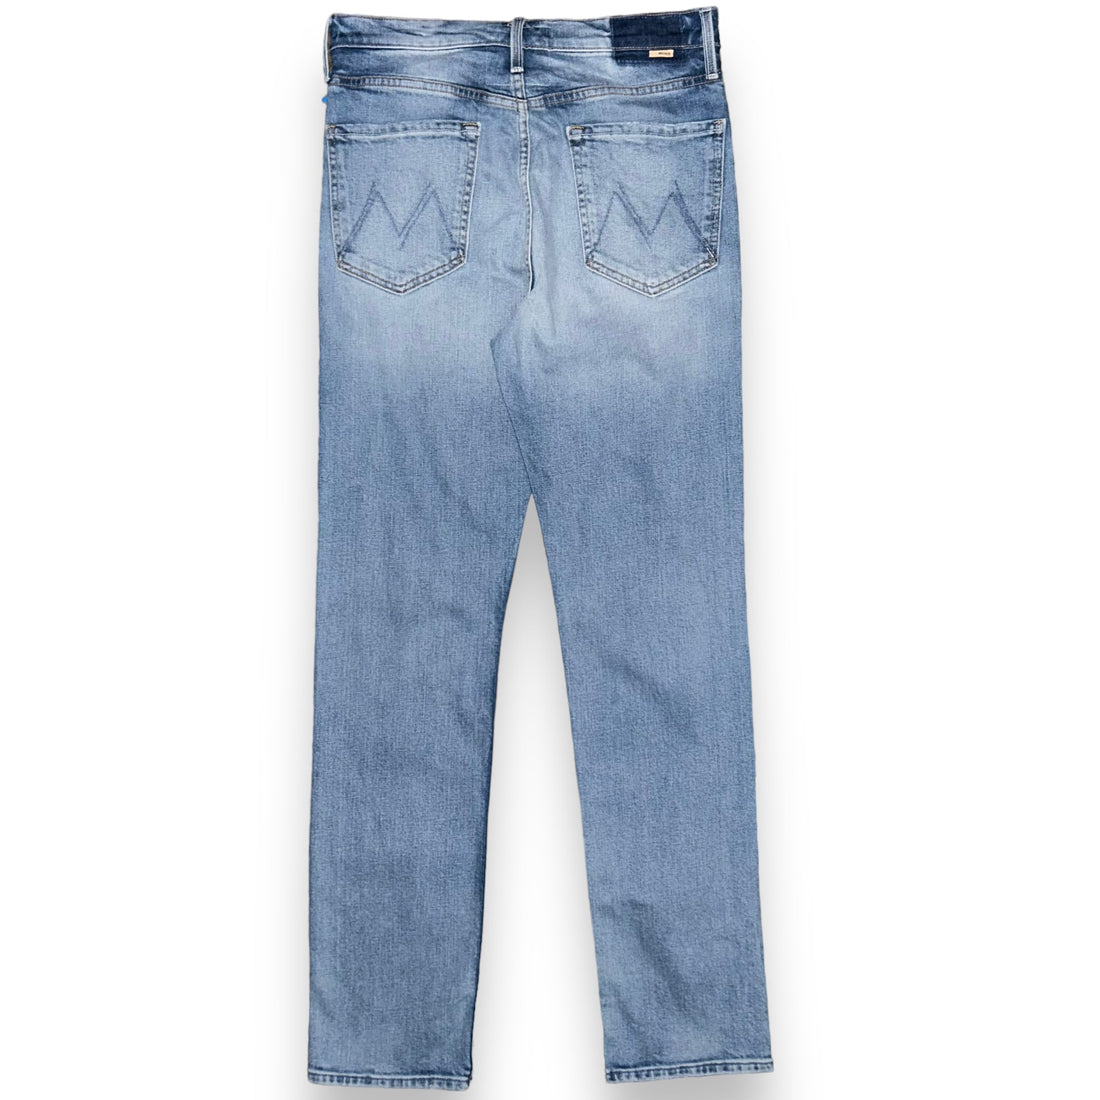 Jeans  (30 USA  S)